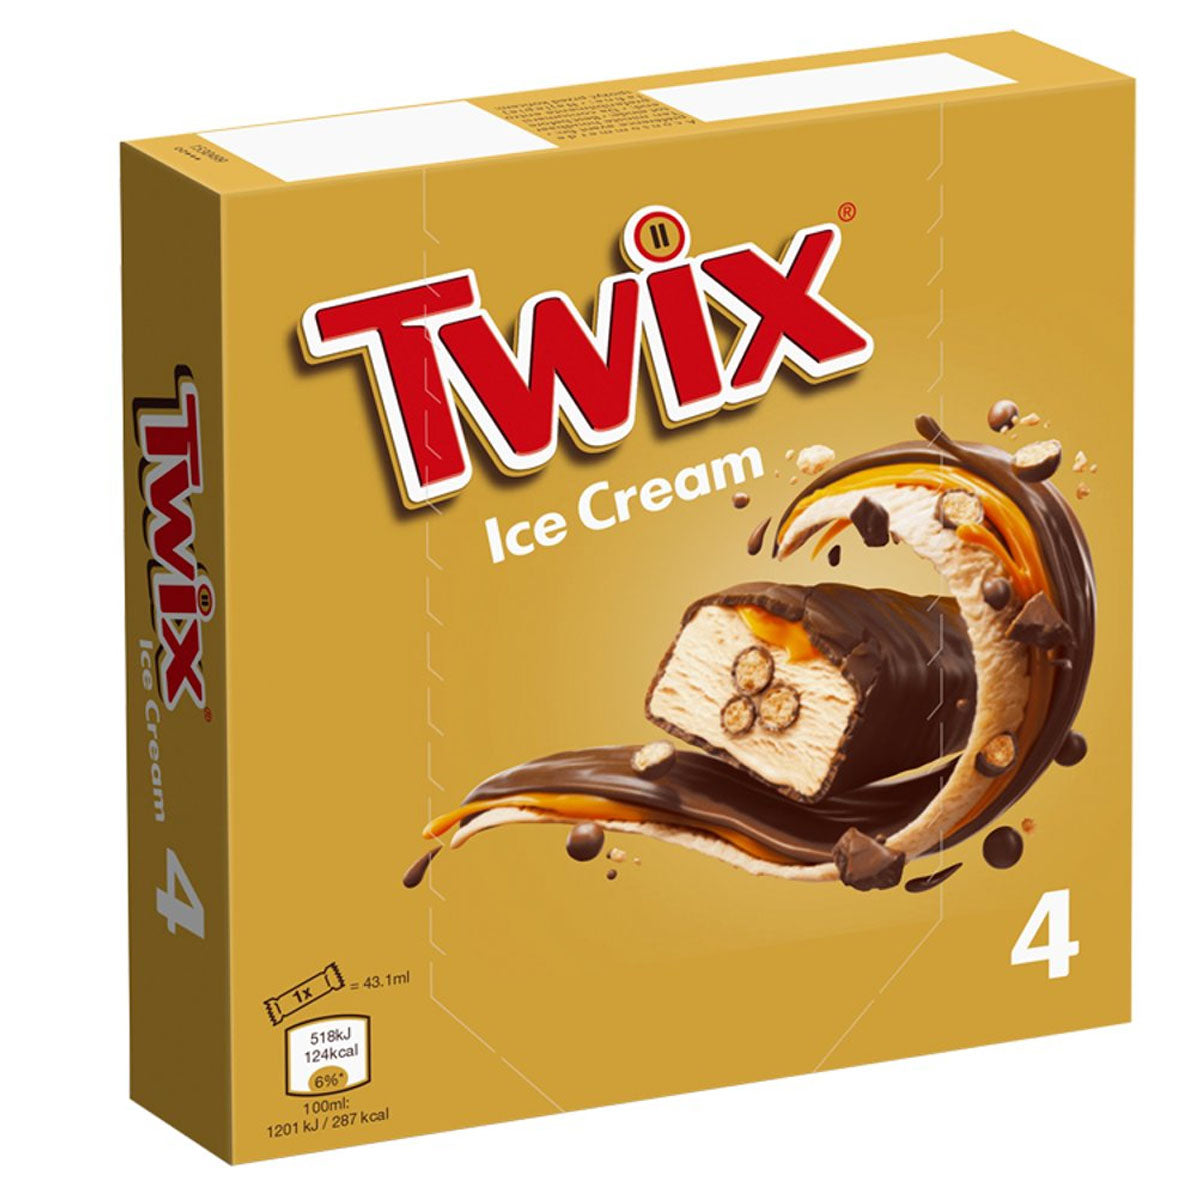 Twix - Chocolate & Caramel Ice Cream - 4pcs ice cream in a box.